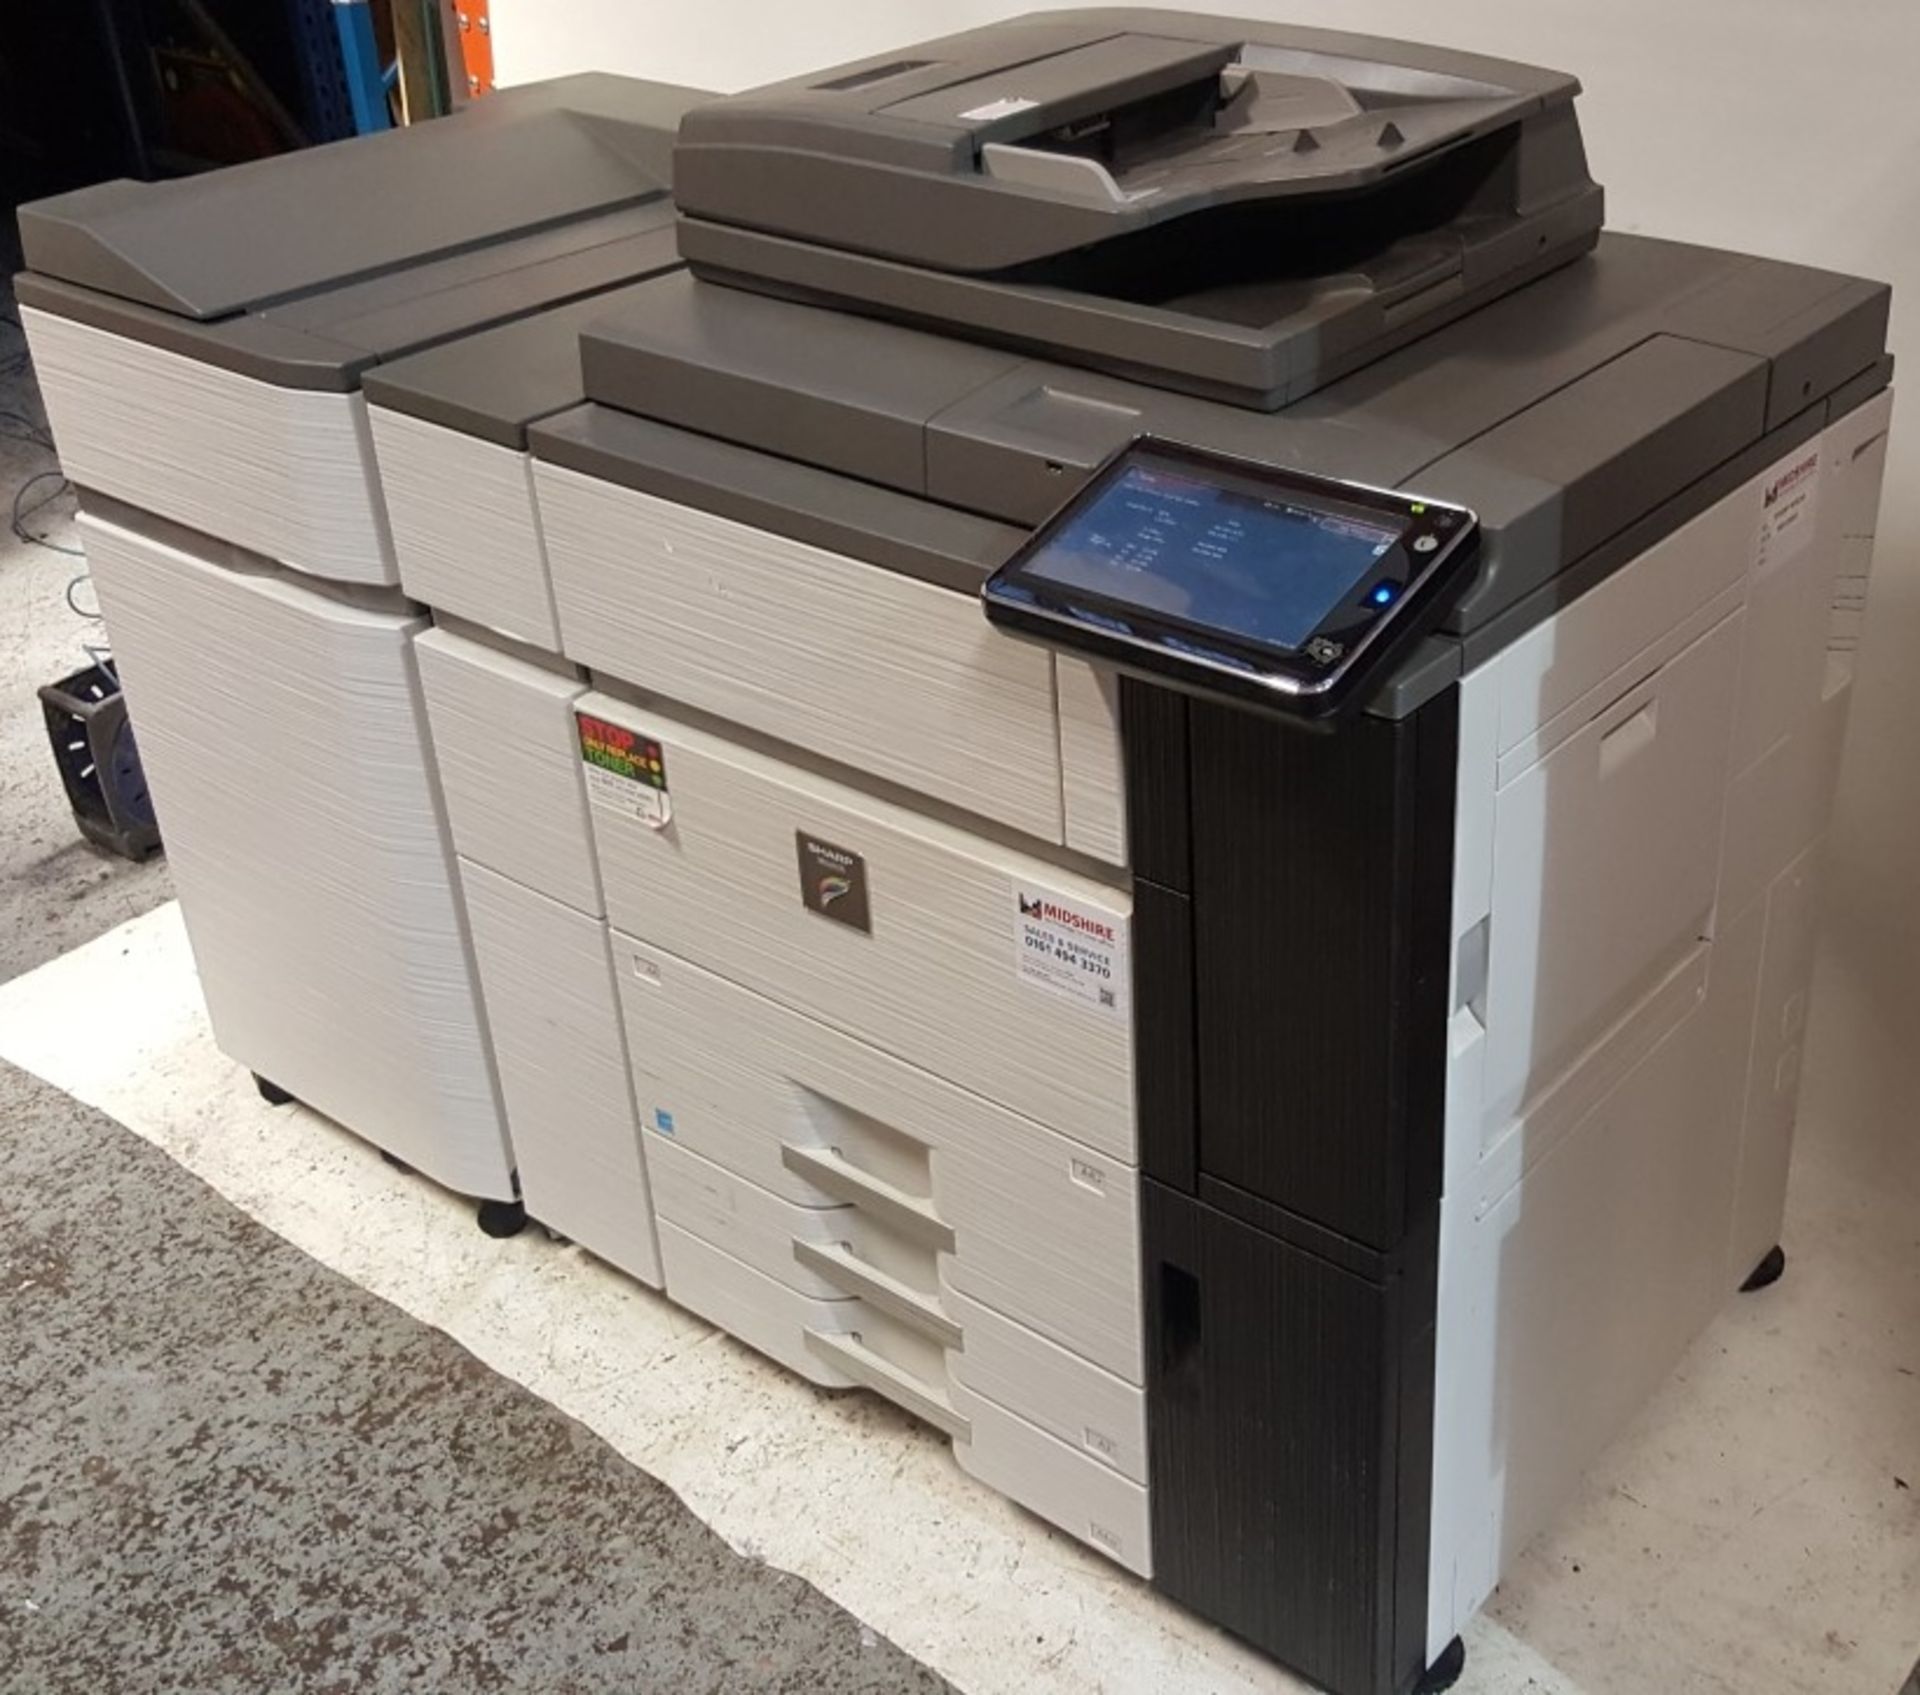 1 x Sharp MX6240N Office Photocopier Printer With Saddle Stitch Finisher & Curl Correction Unit - - Image 8 of 9